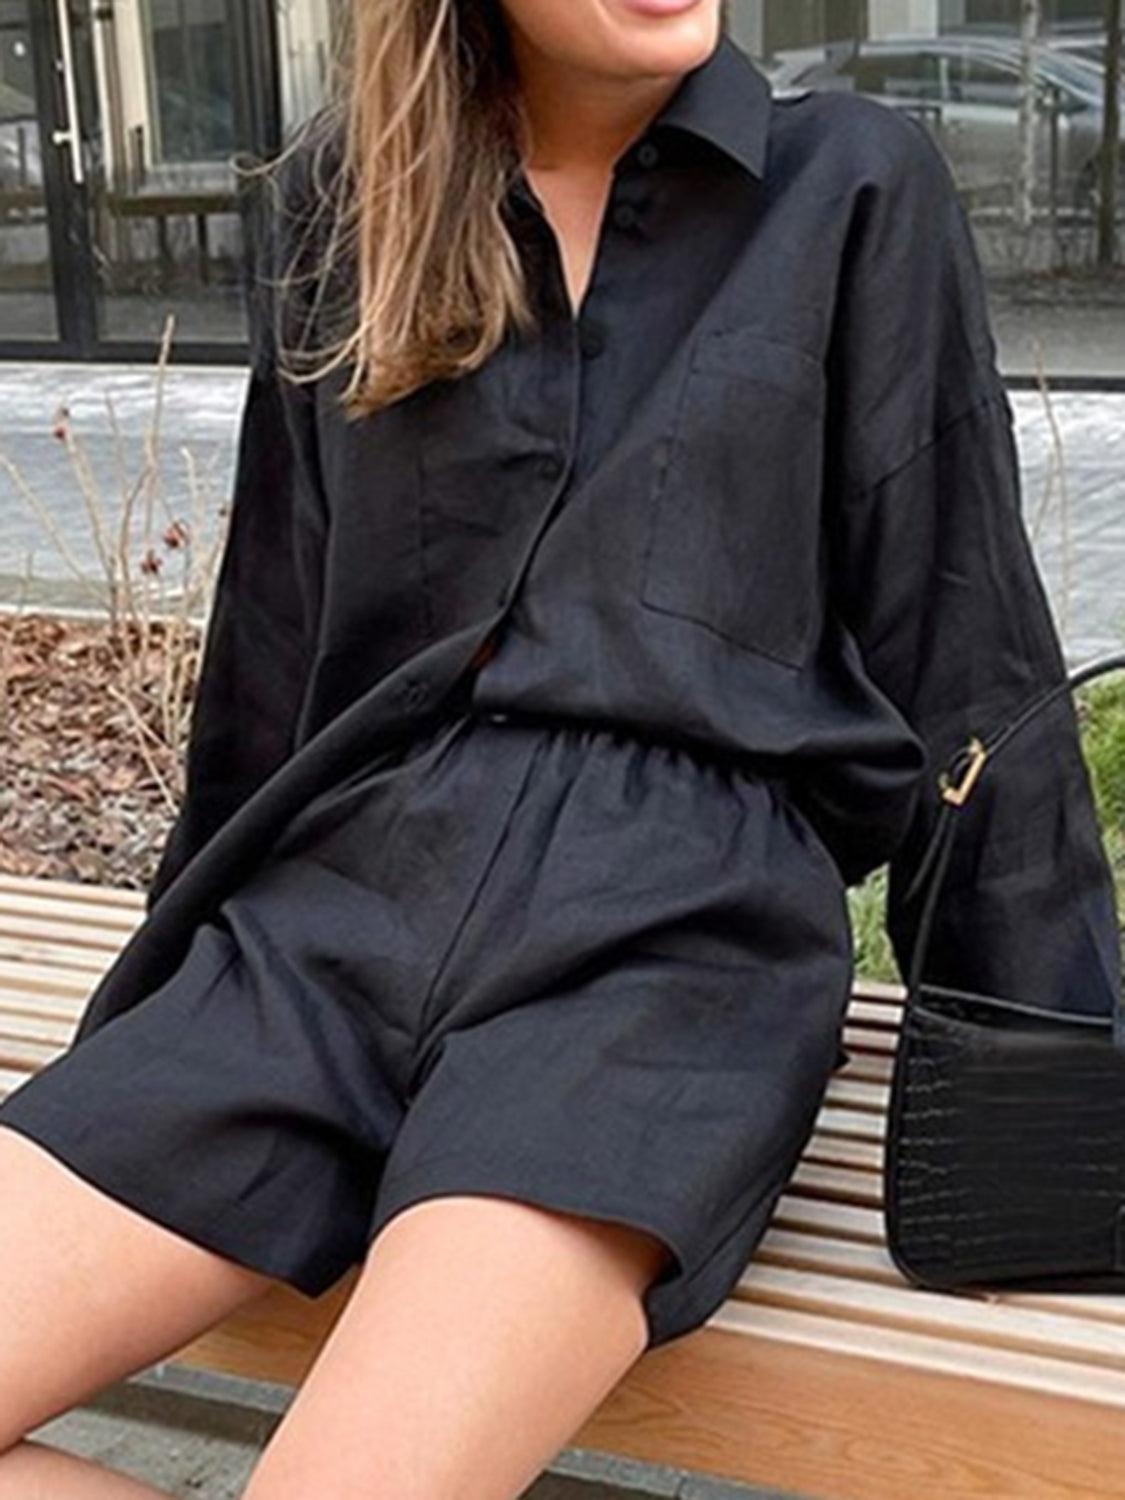 a woman sitting on a bench wearing a black shirt dress